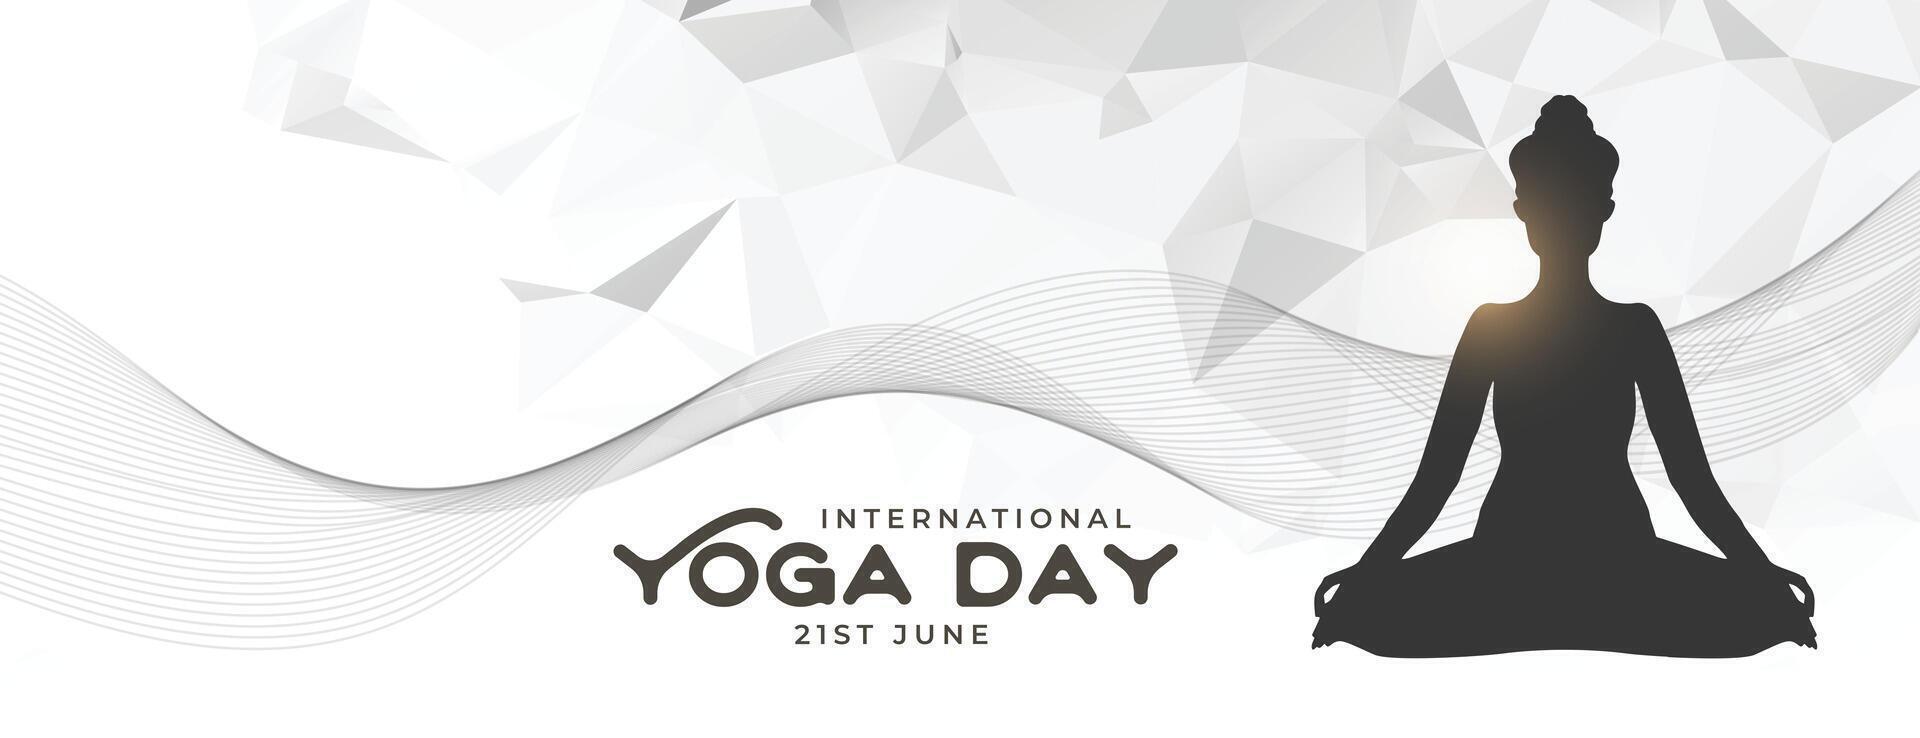 modern International Yoga Tag Poster im niedrig poly Stil vektor